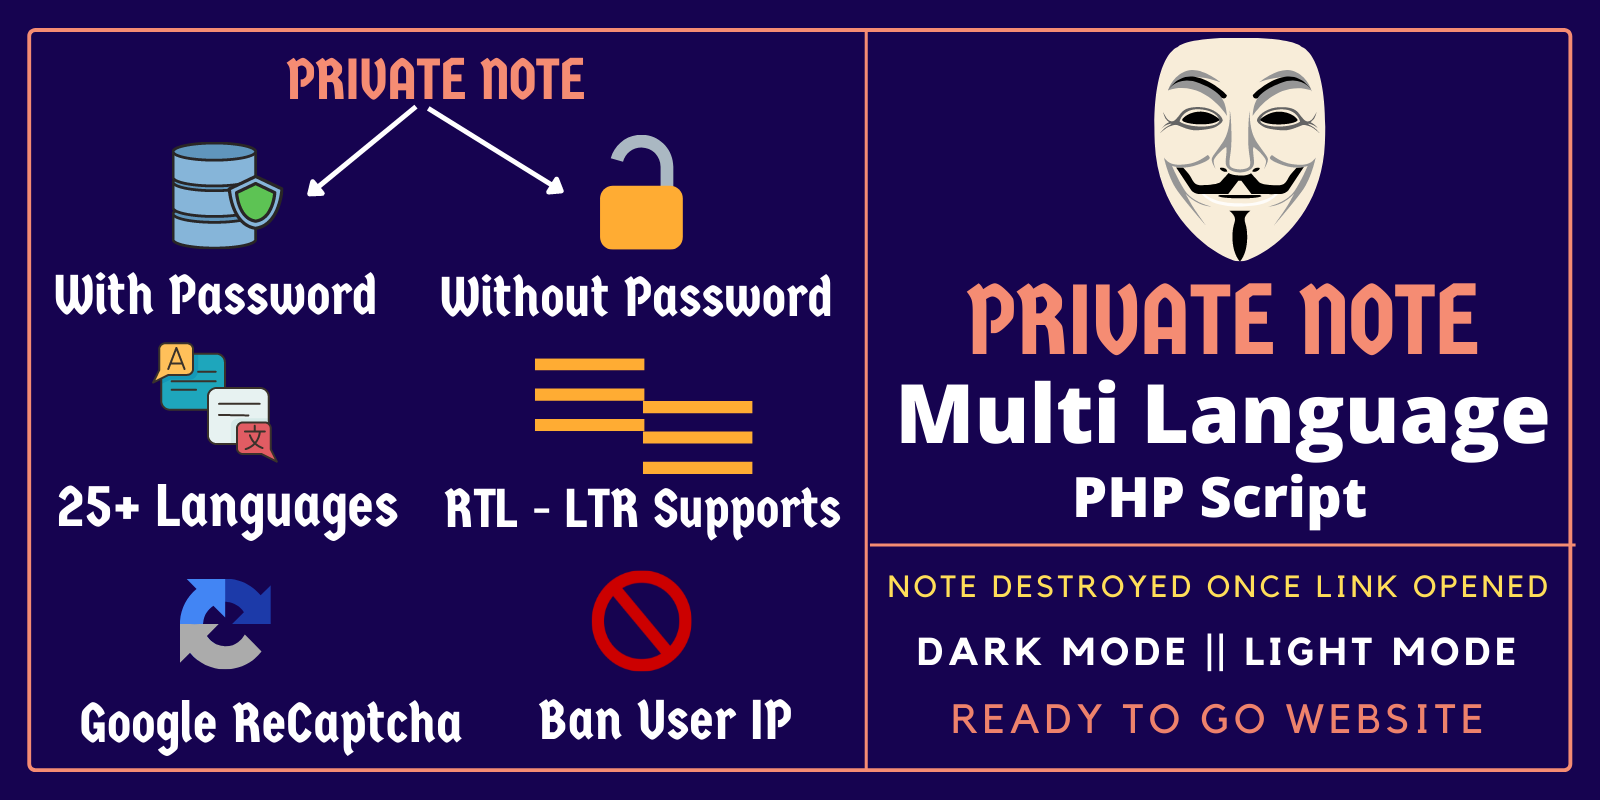 Privy - Anonymous Private Note Multi Language PHP Script